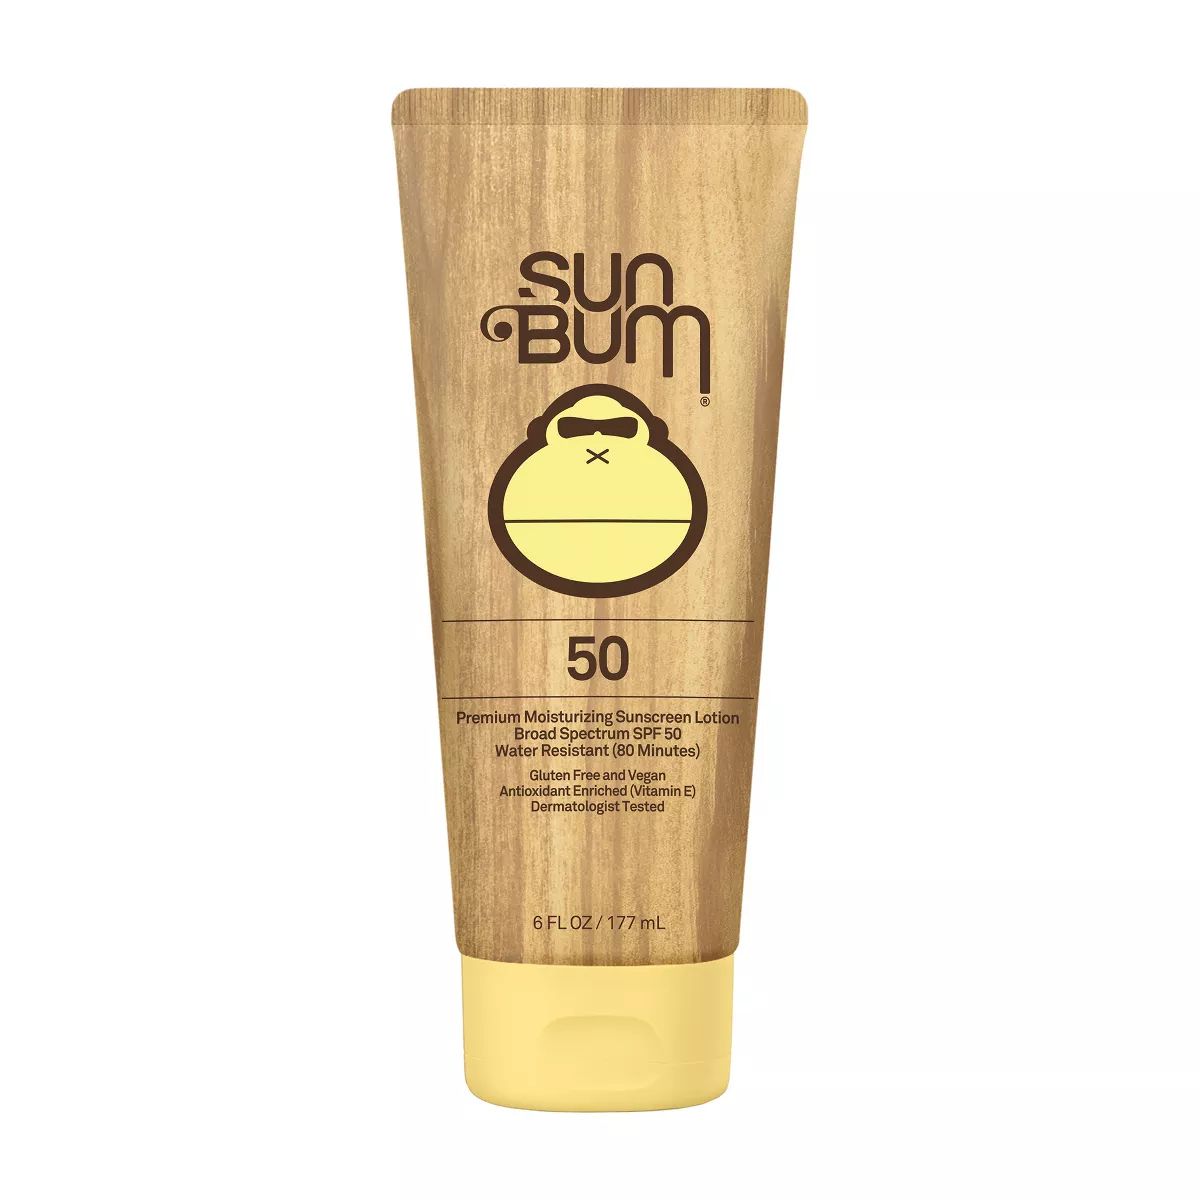 Sun Bum Original Sunscreen Lotion - SPF 50 - 6 fl oz | Target